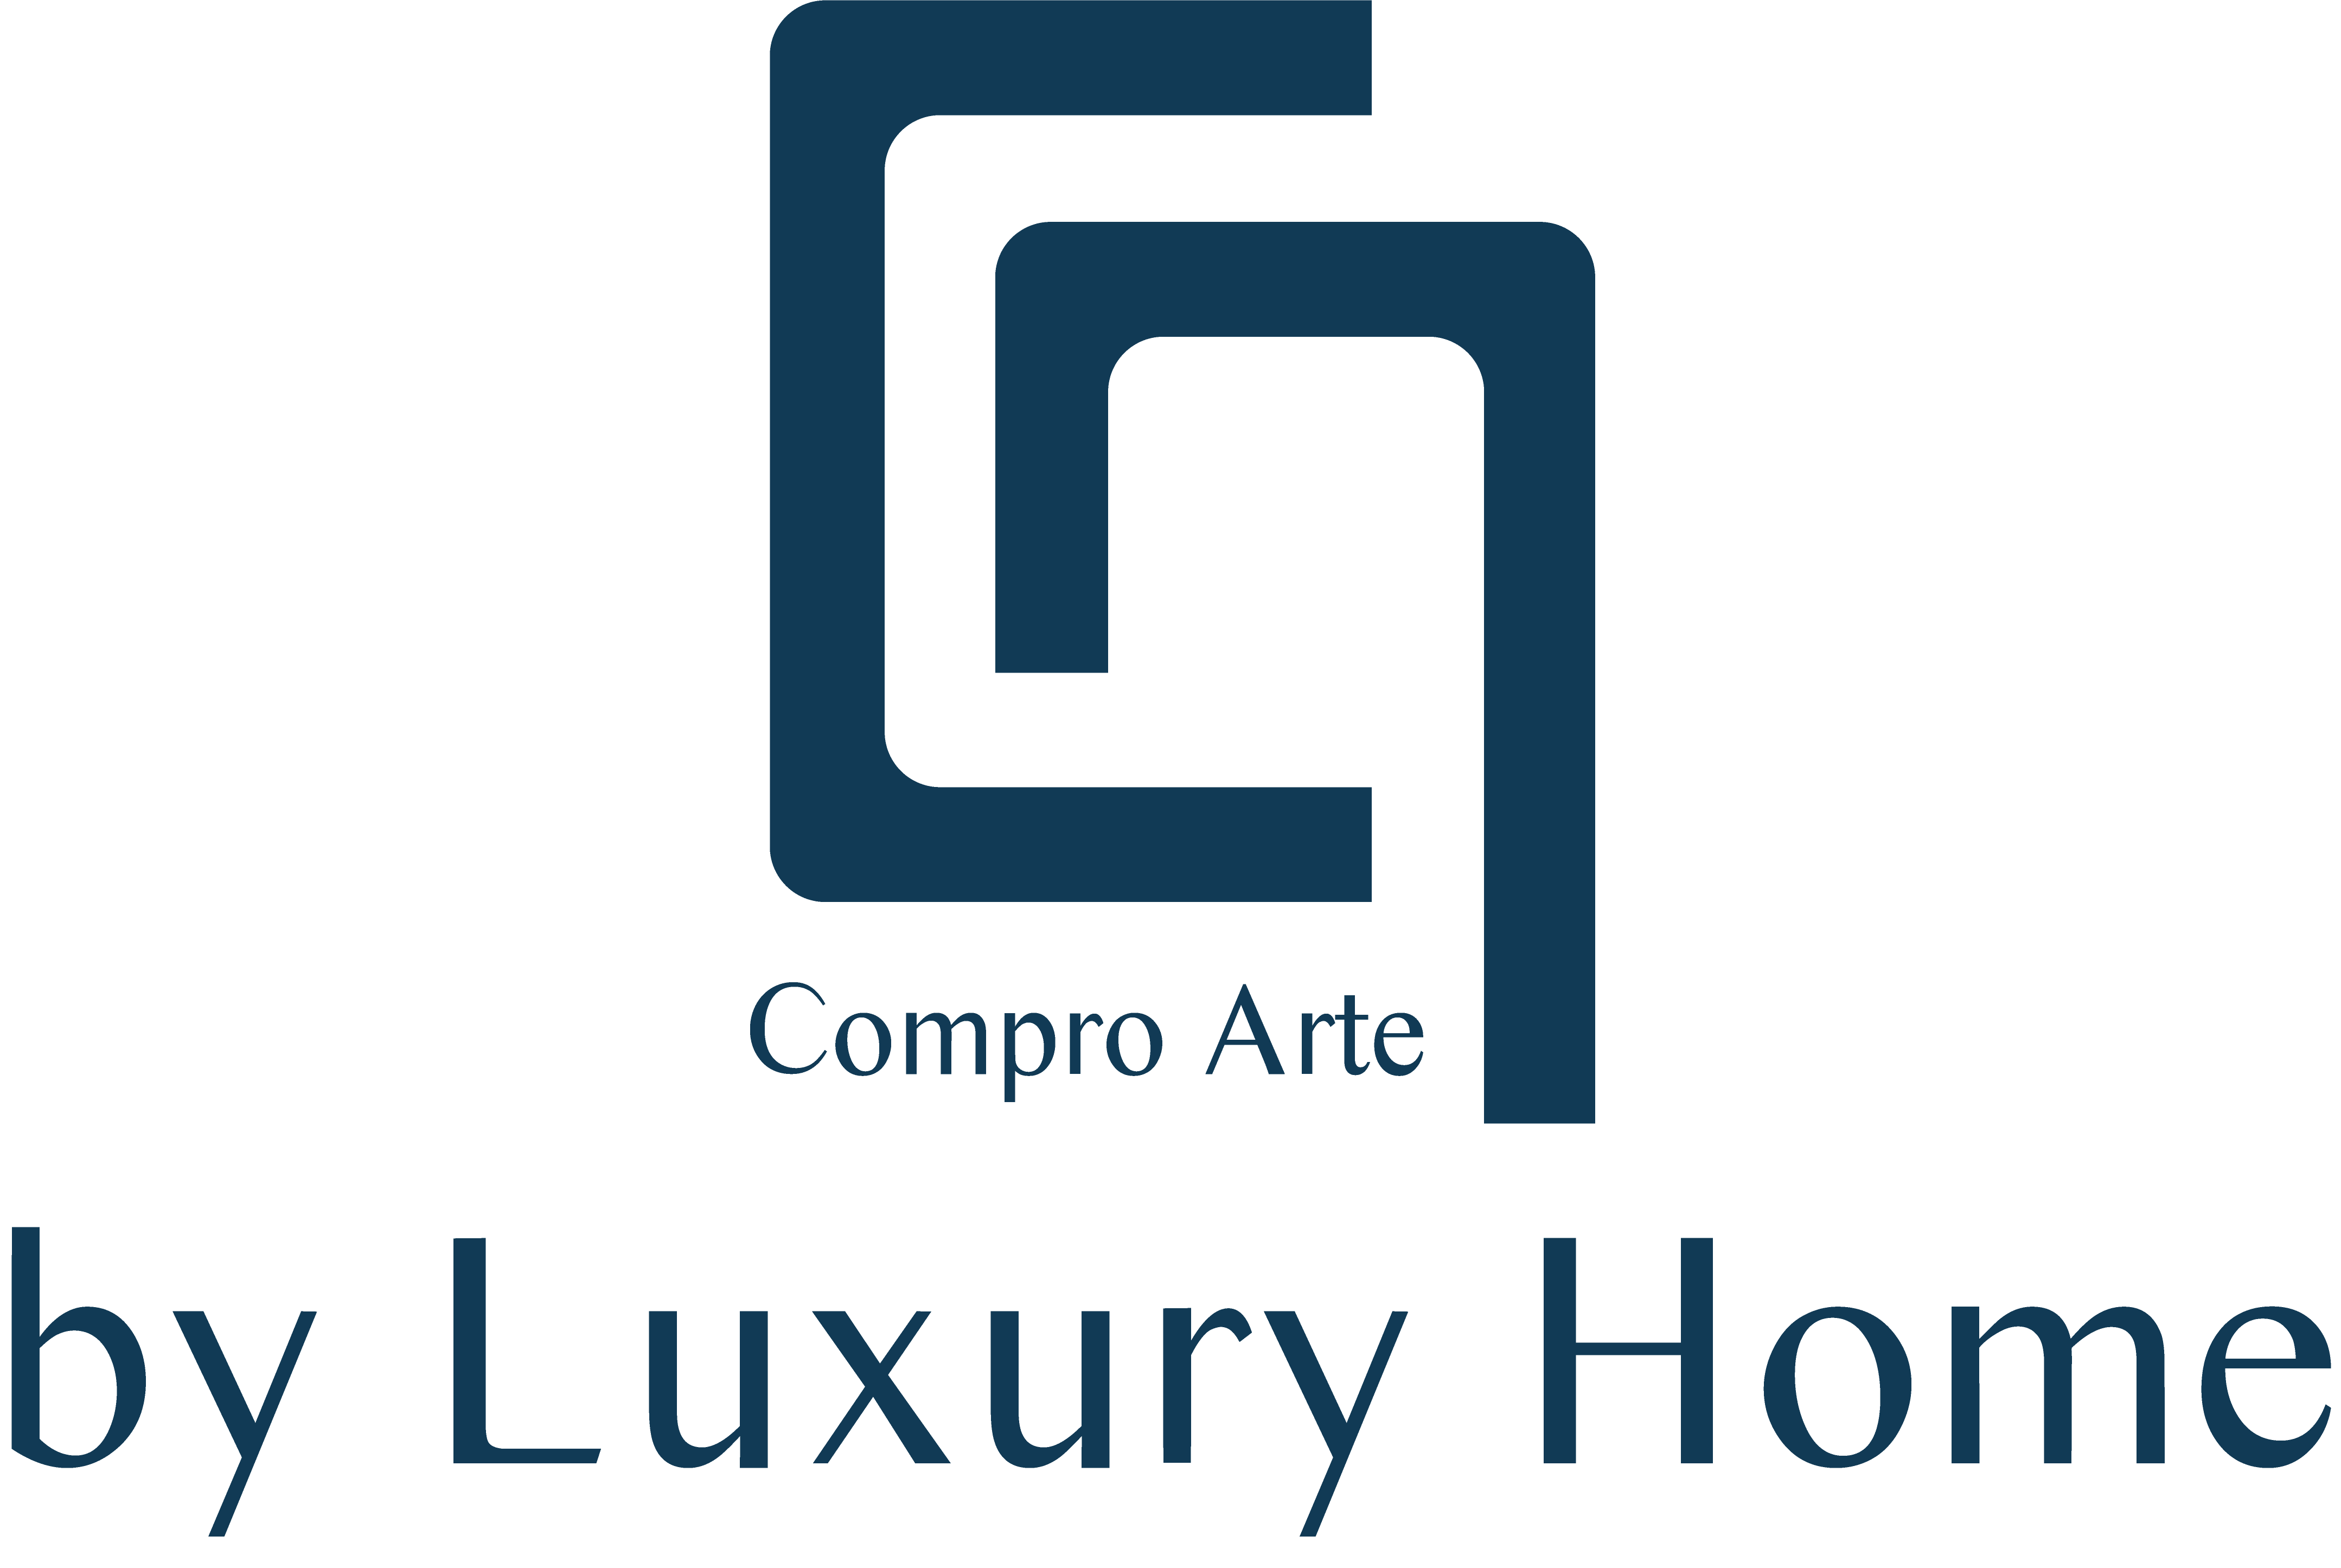 Luxury Home Compro Arte